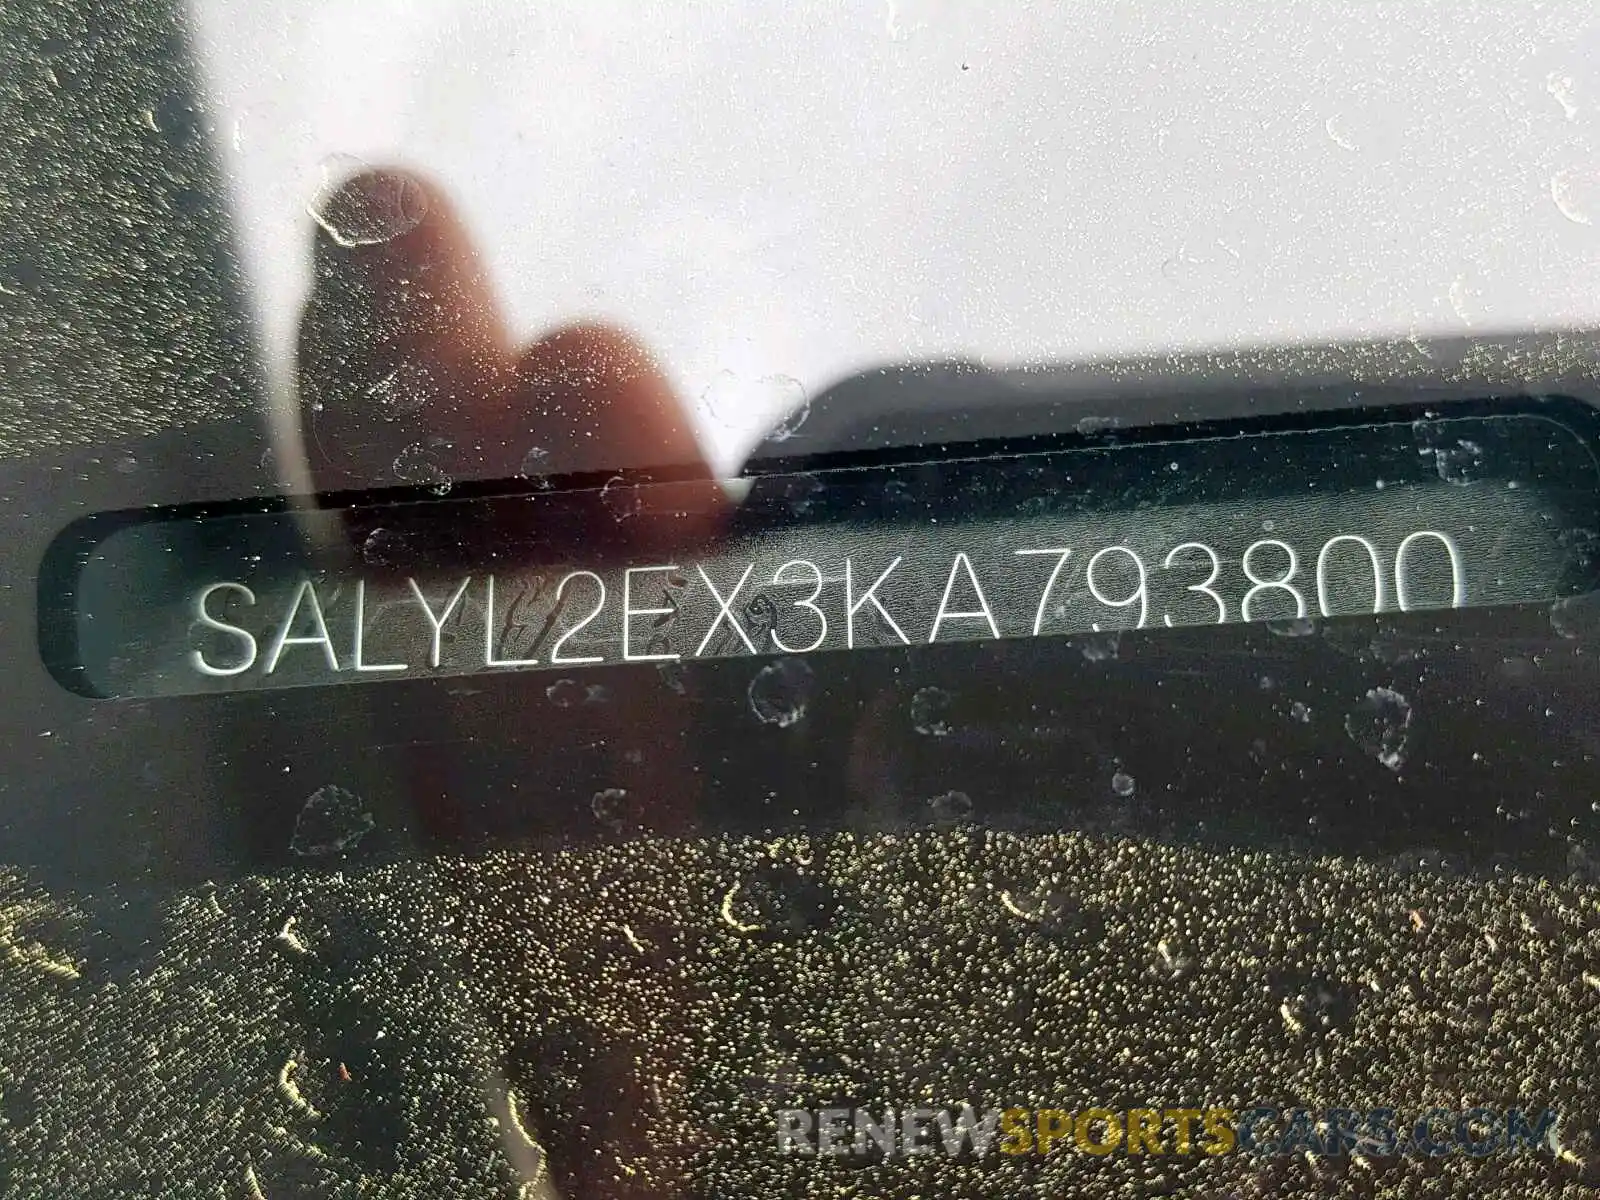 10 Photograph of a damaged car SALYL2EX3KA793800 LAND ROVER RANGE ROVE 2019